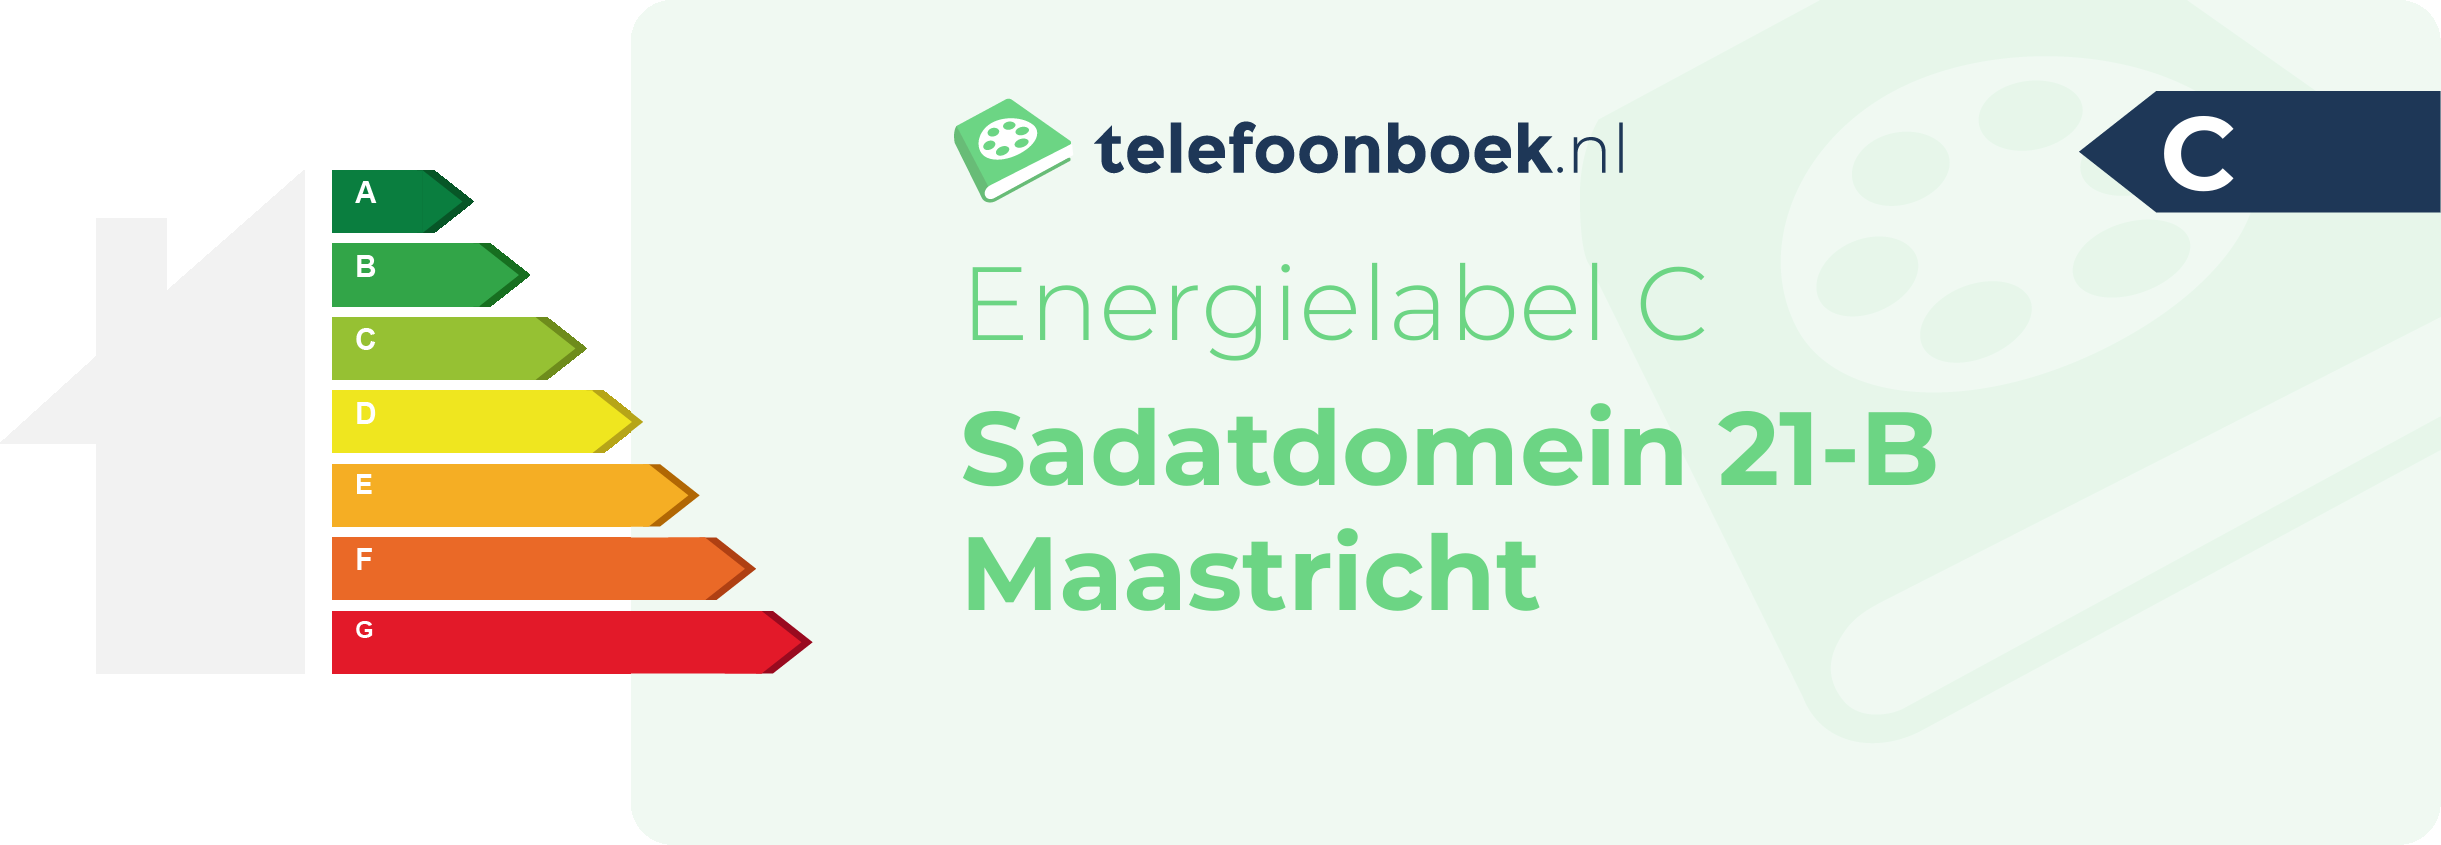 Energielabel Sadatdomein 21-B Maastricht